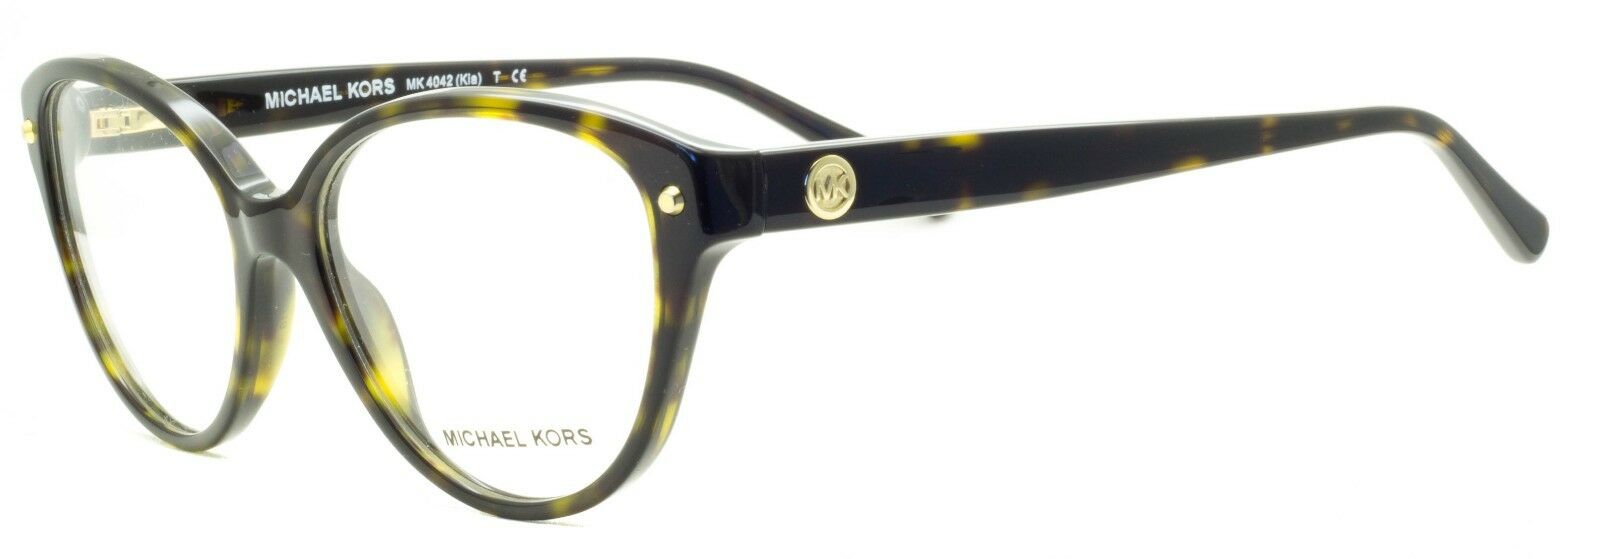 MICHAEL KORS MK 4042 3006 Kia Eyewear FRAMES RX Optical Glasses Eyeglasses - New